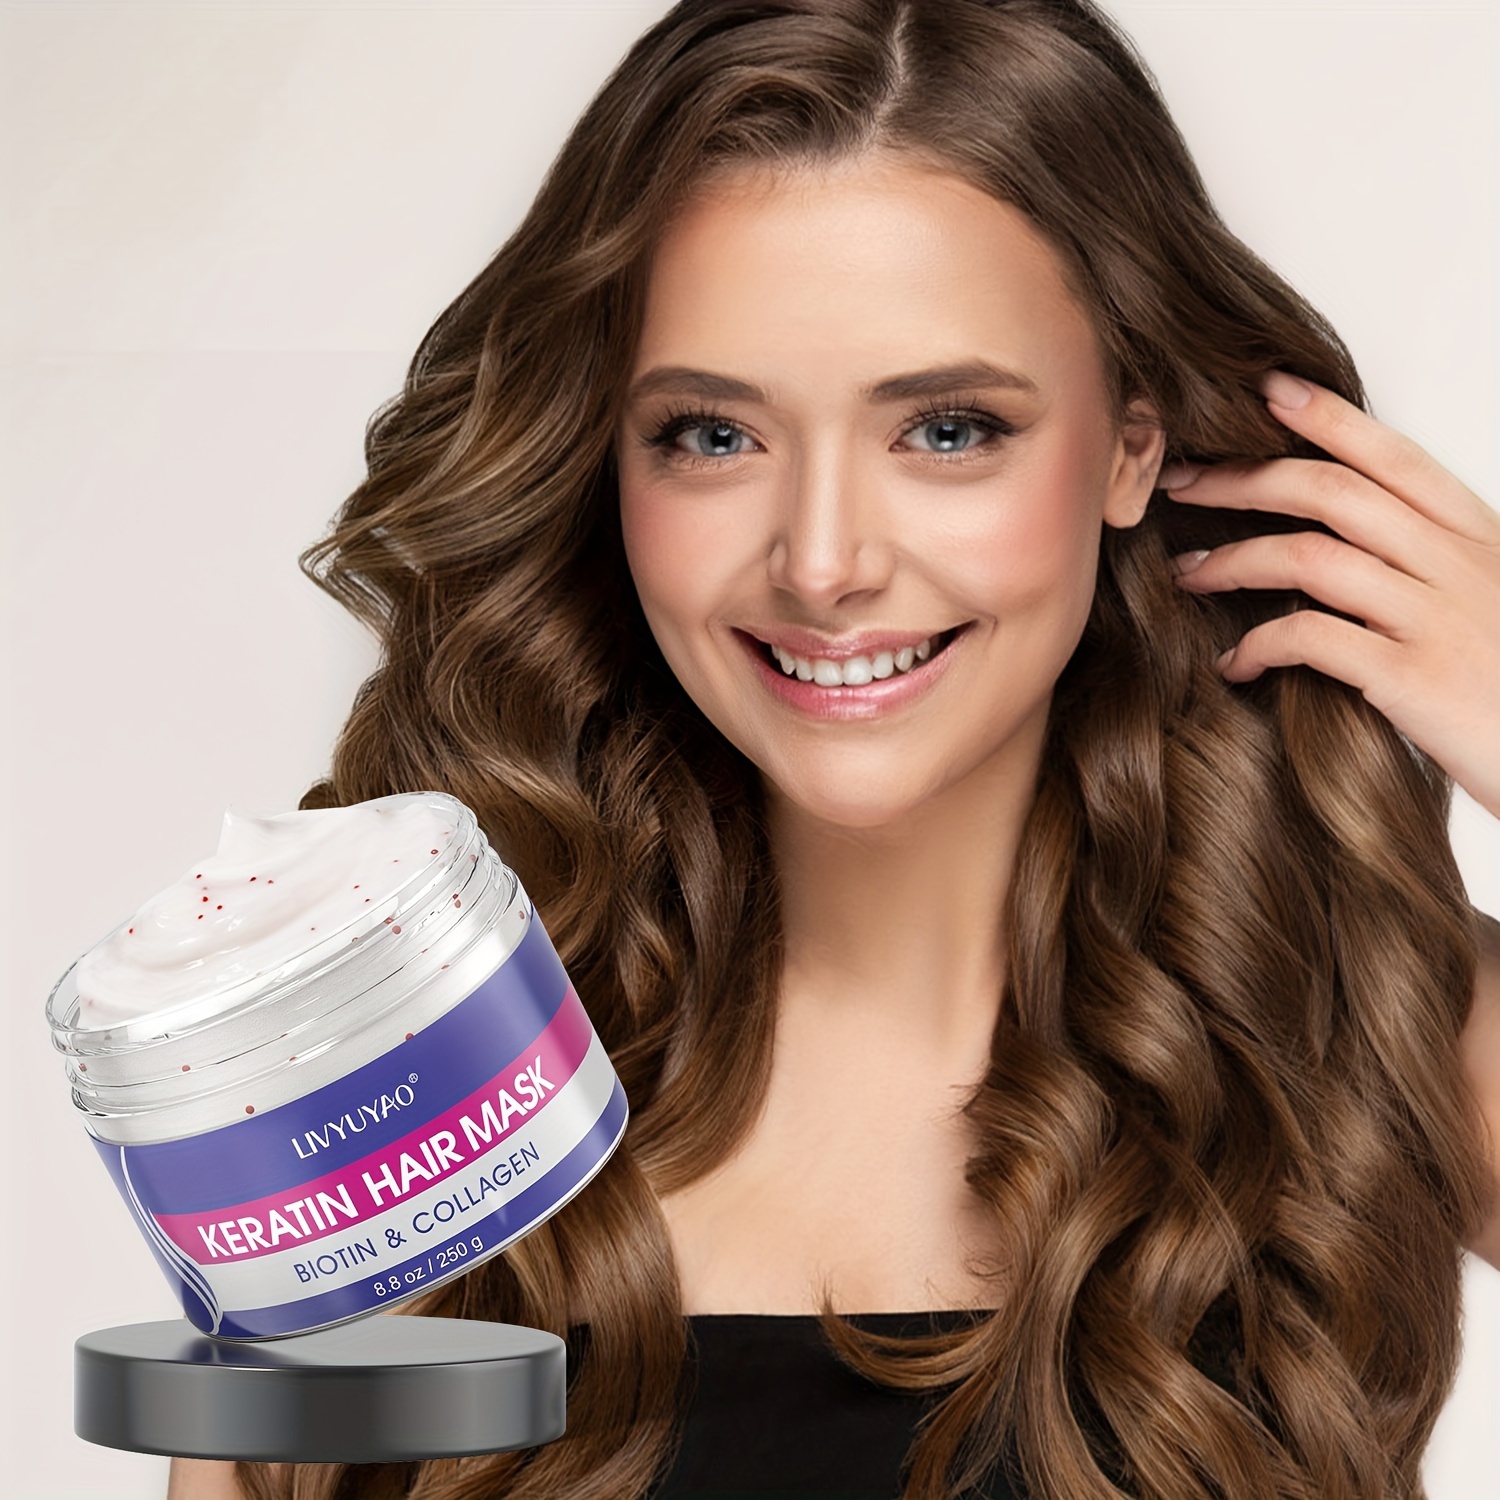 

250g Keratin Hair Mask With Biotin & Collagen, Deep Moisturizing Hair Mask For All Hair Types